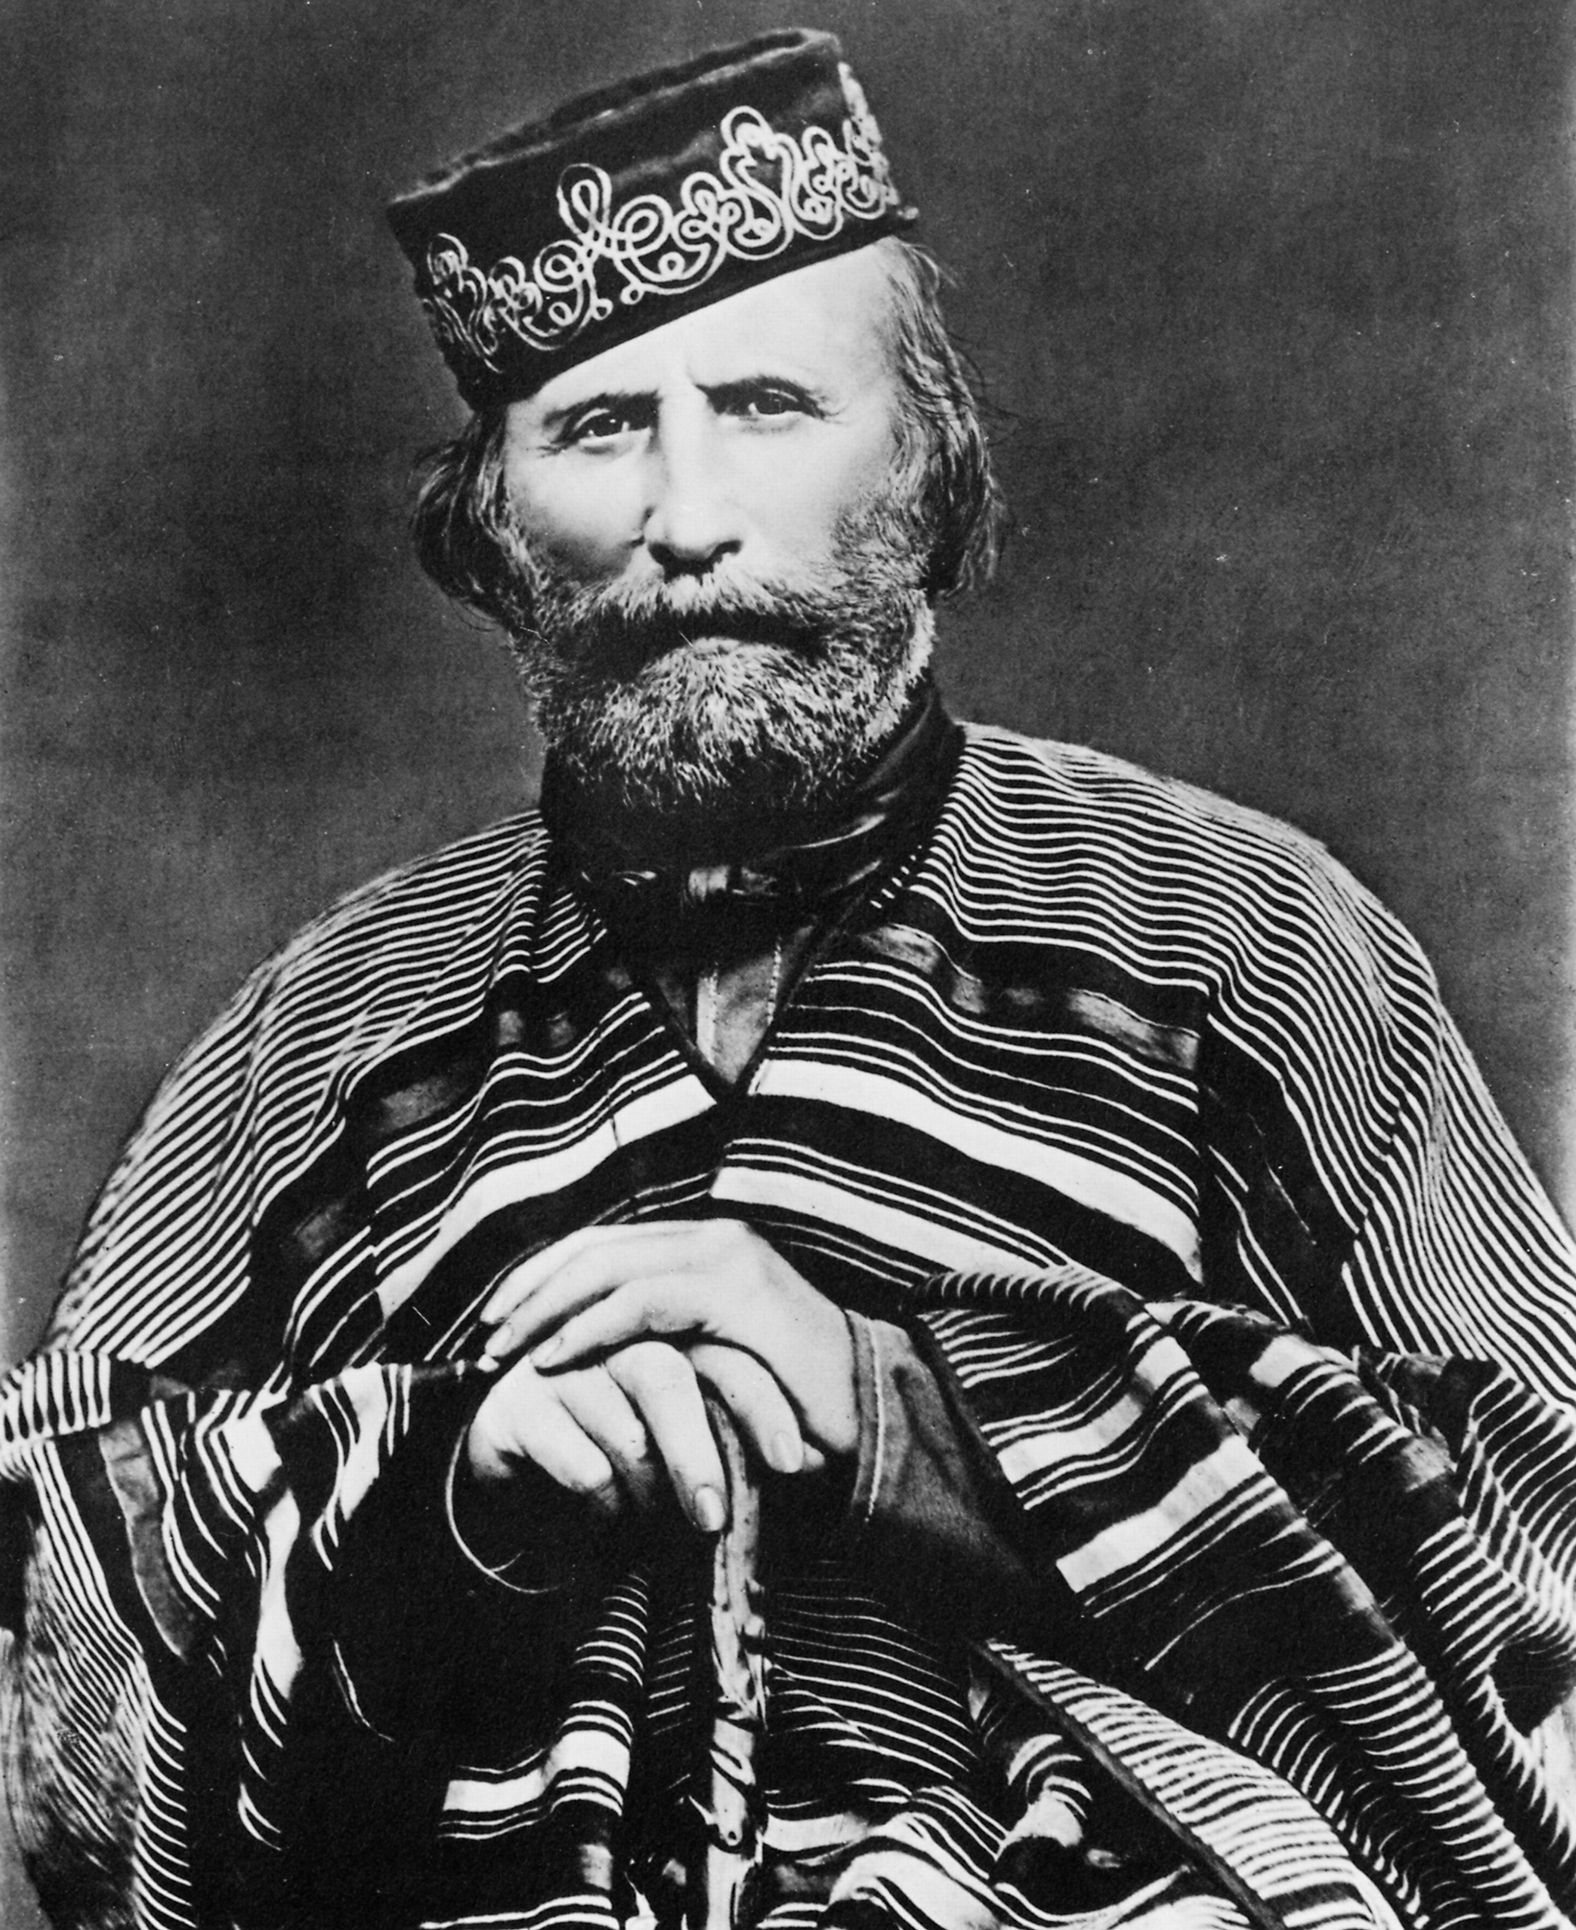 Alinari, Giuseppe Garibaldi, 1865-1870 ca., Alinari Archives